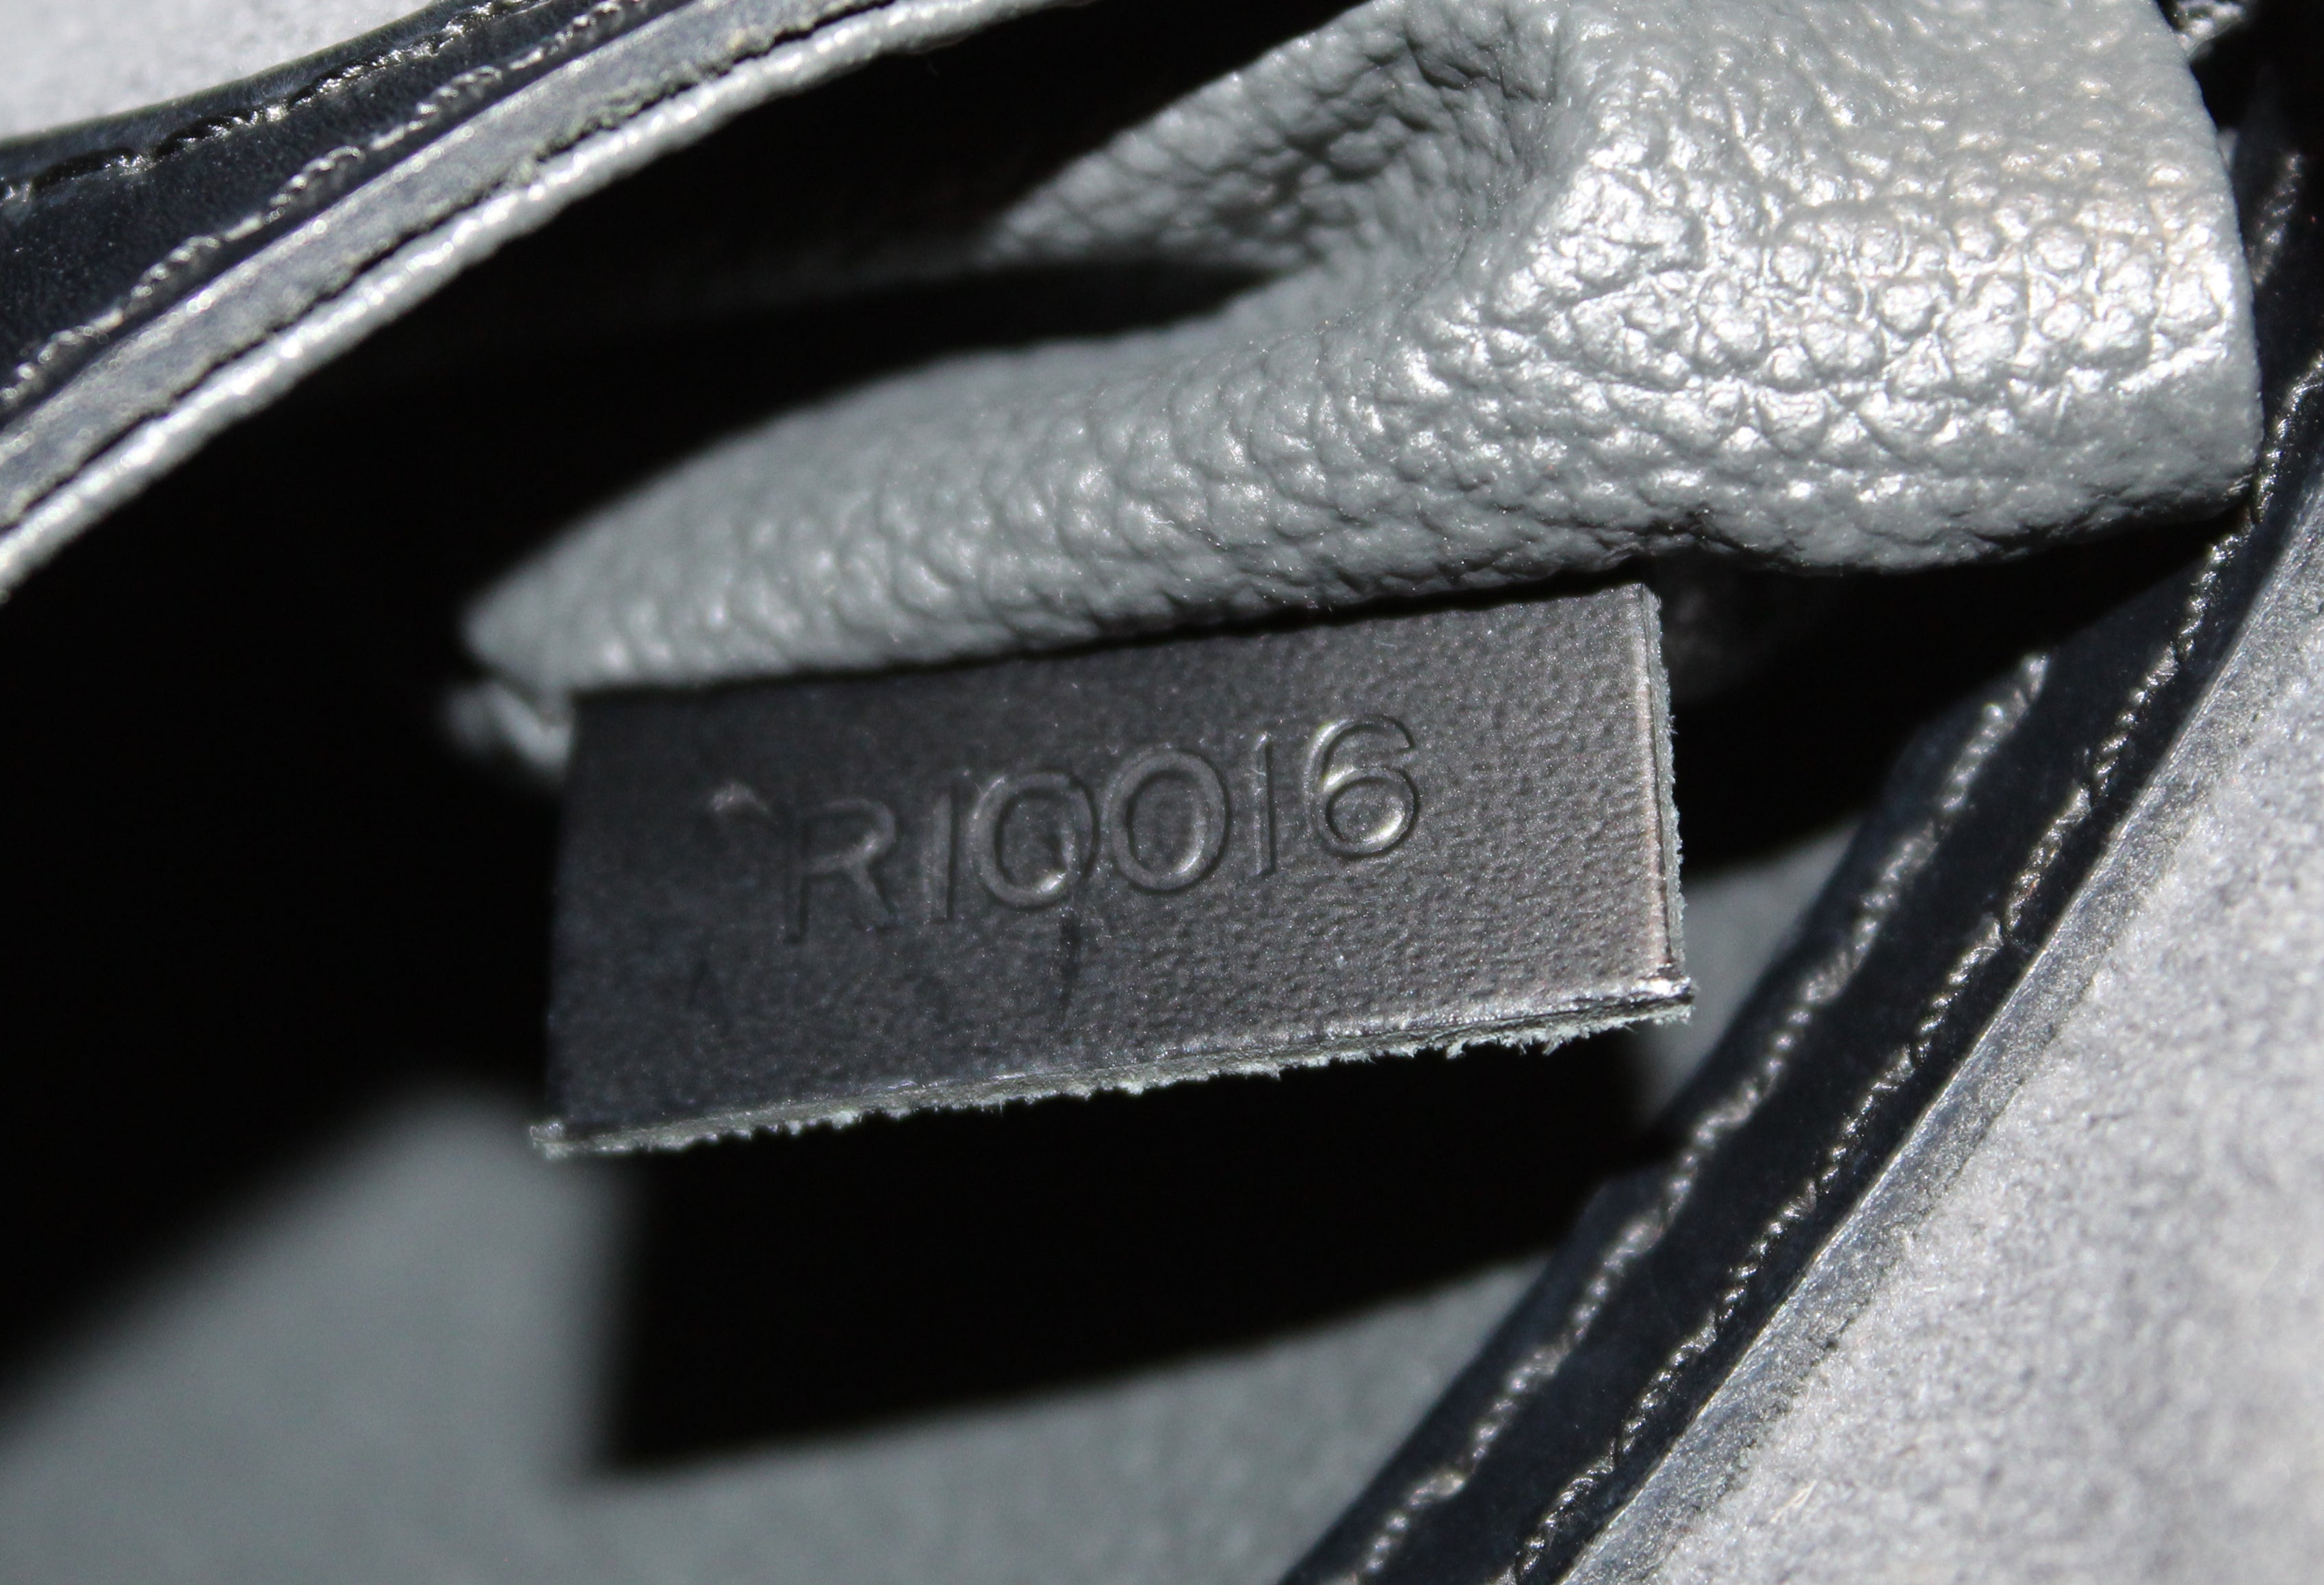 Authentic Louis Vuitton Black Epi Leather Mabillon Backpack